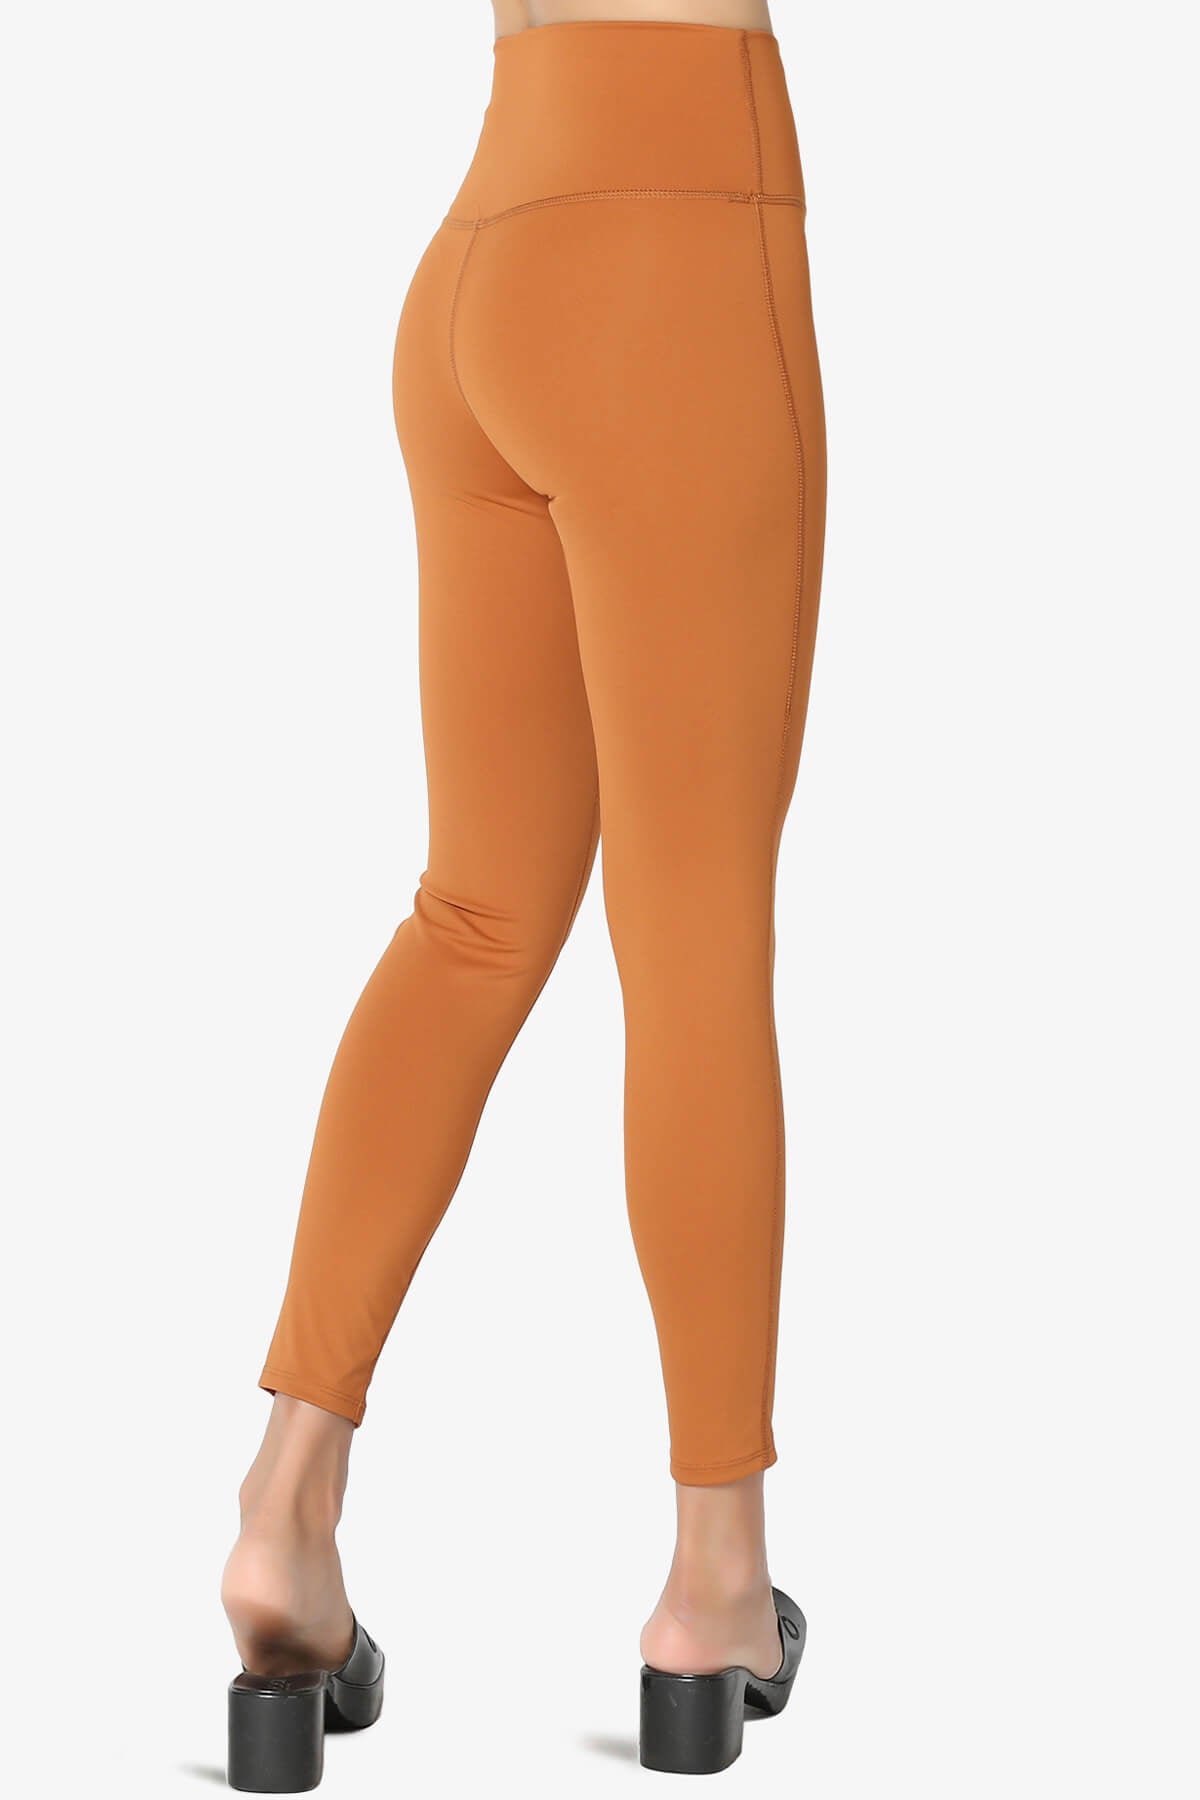 Sold ALO Yoga Moto Leggings in Sunbaked orange XS